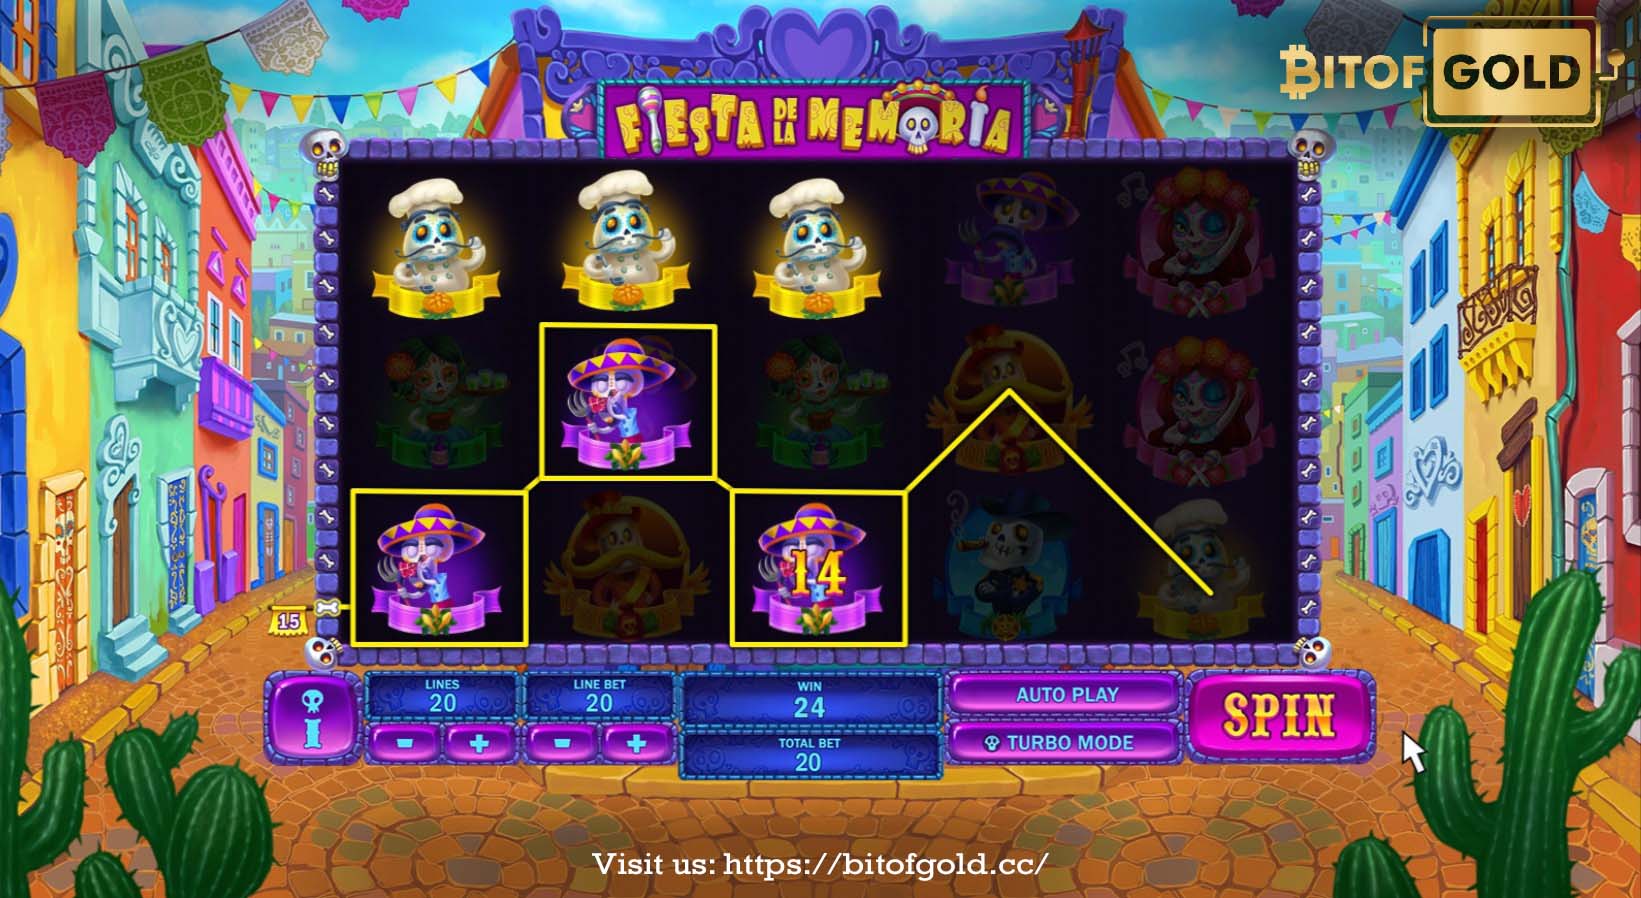 online casino platforms